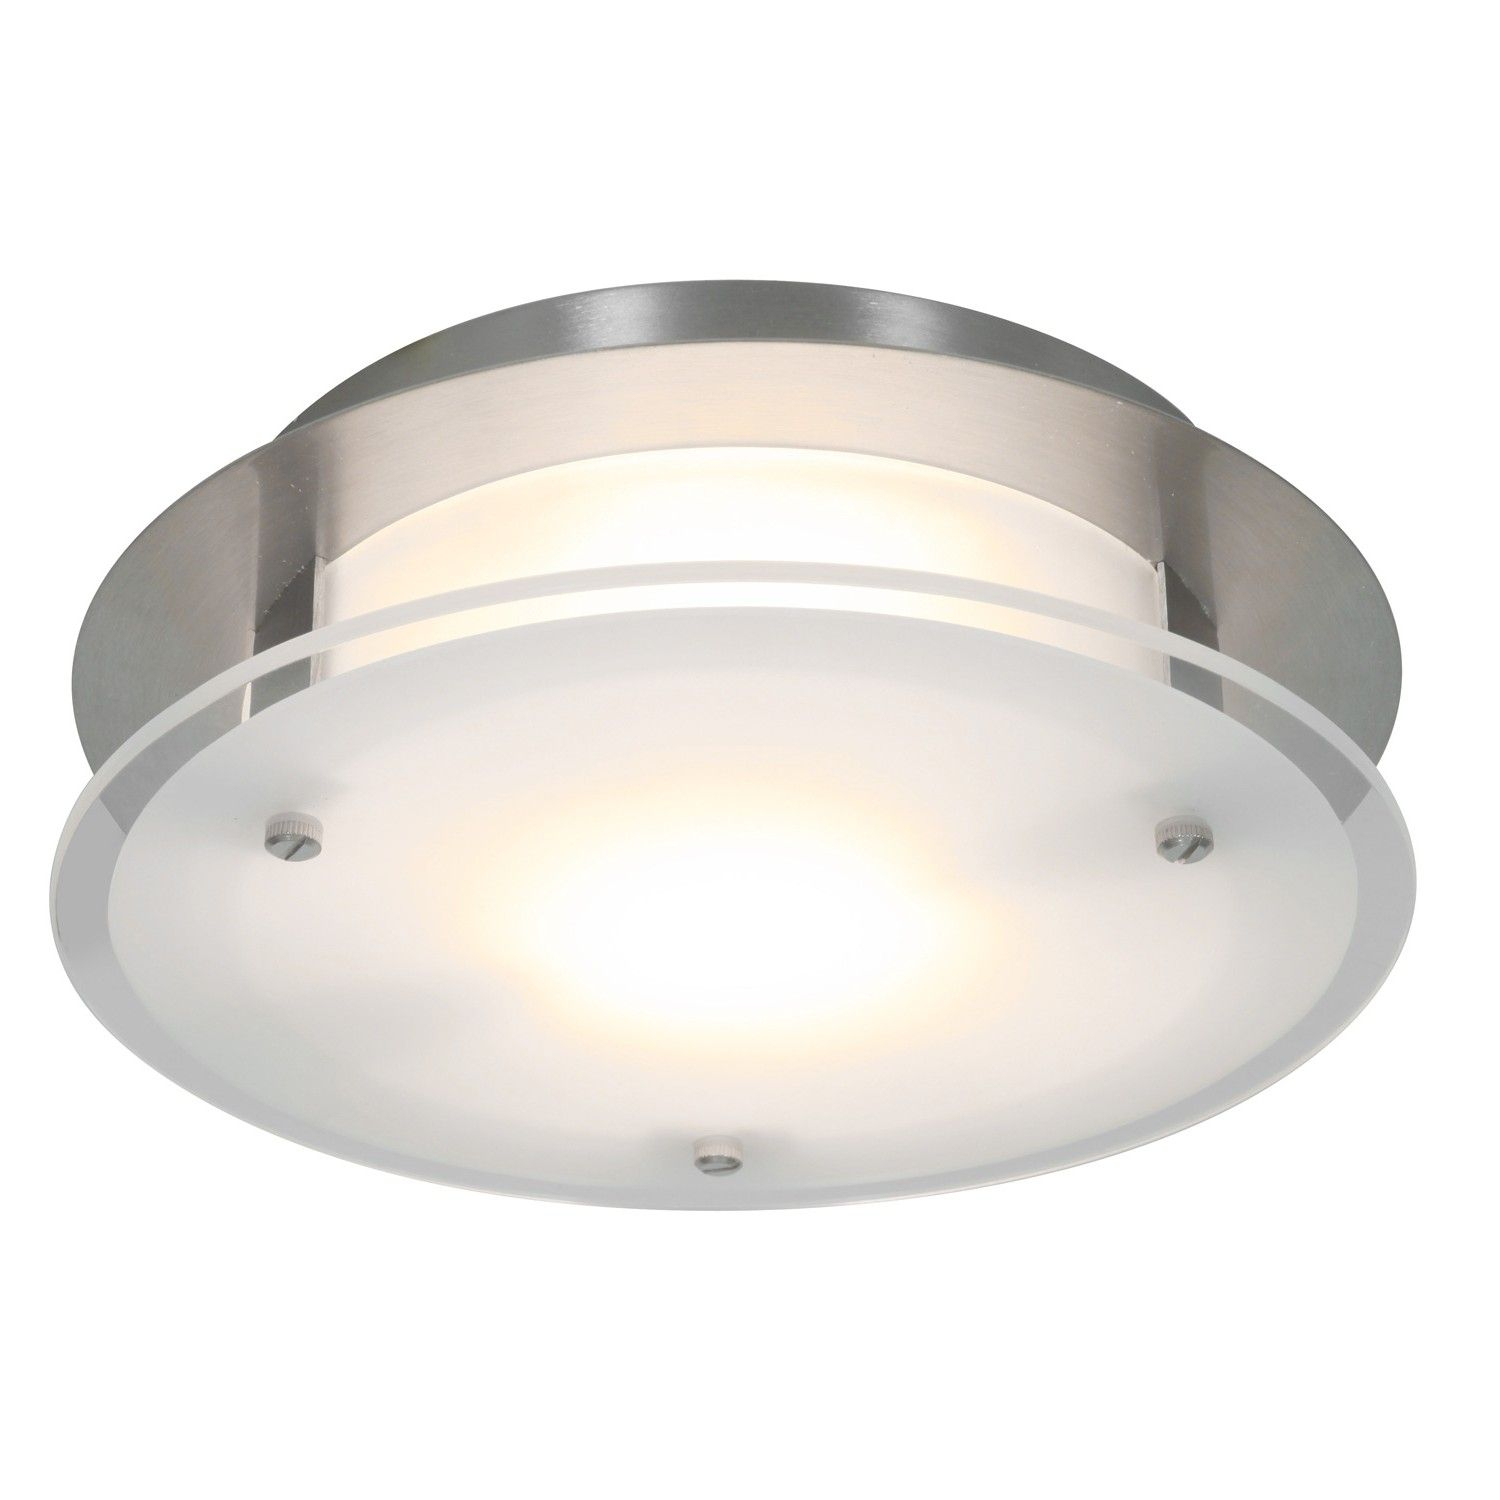 Luxury Ductless Bathroom Fan With Light Bathroom Fan Light throughout proportions 1500 X 1500